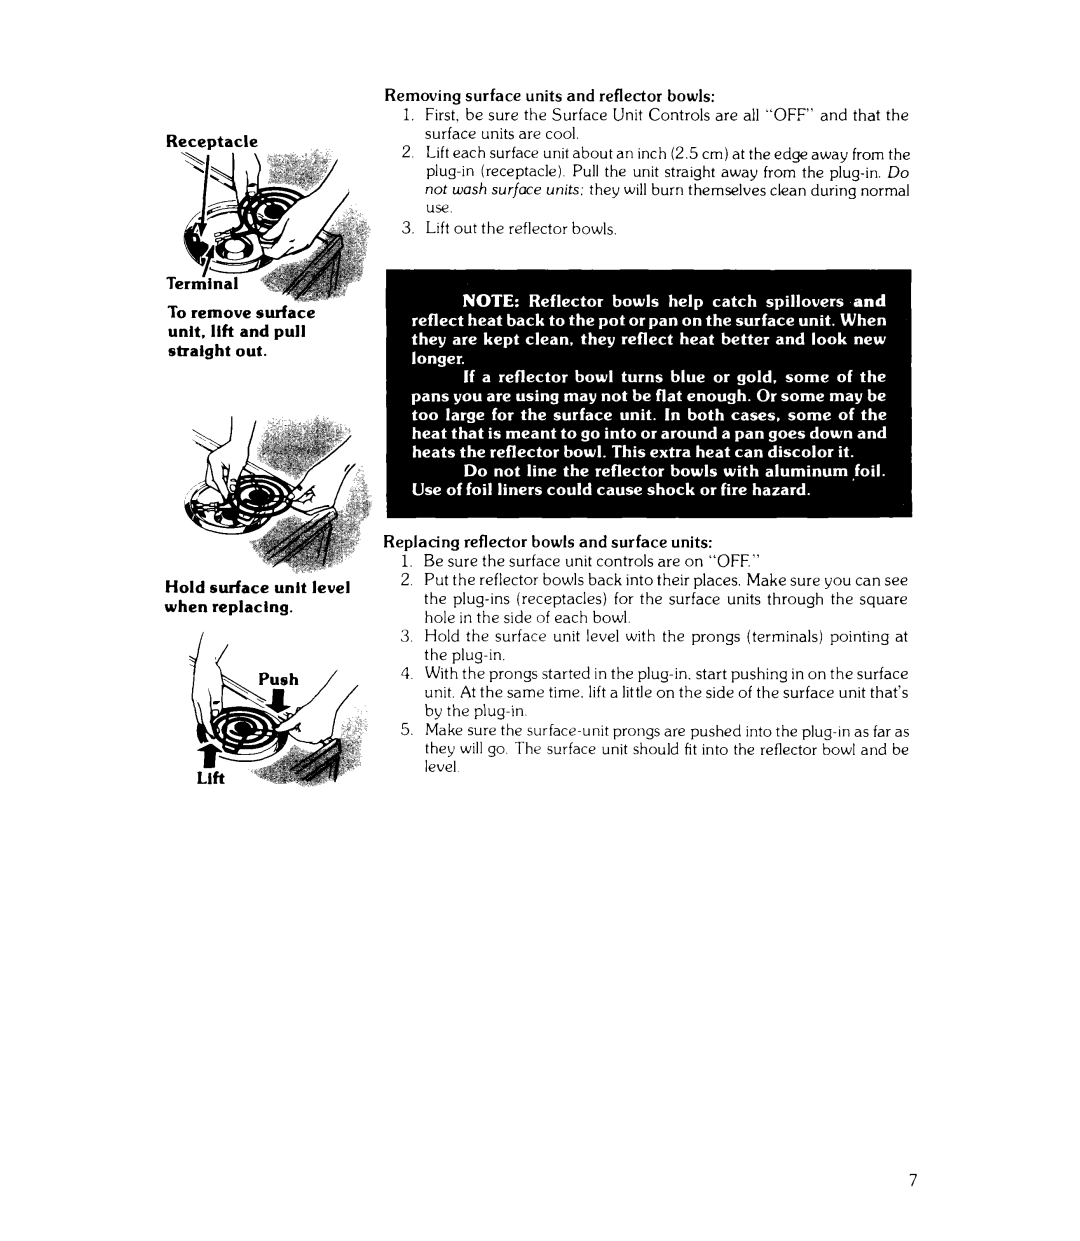 Whirlpool RJE-3020 manual ReceDtacle 